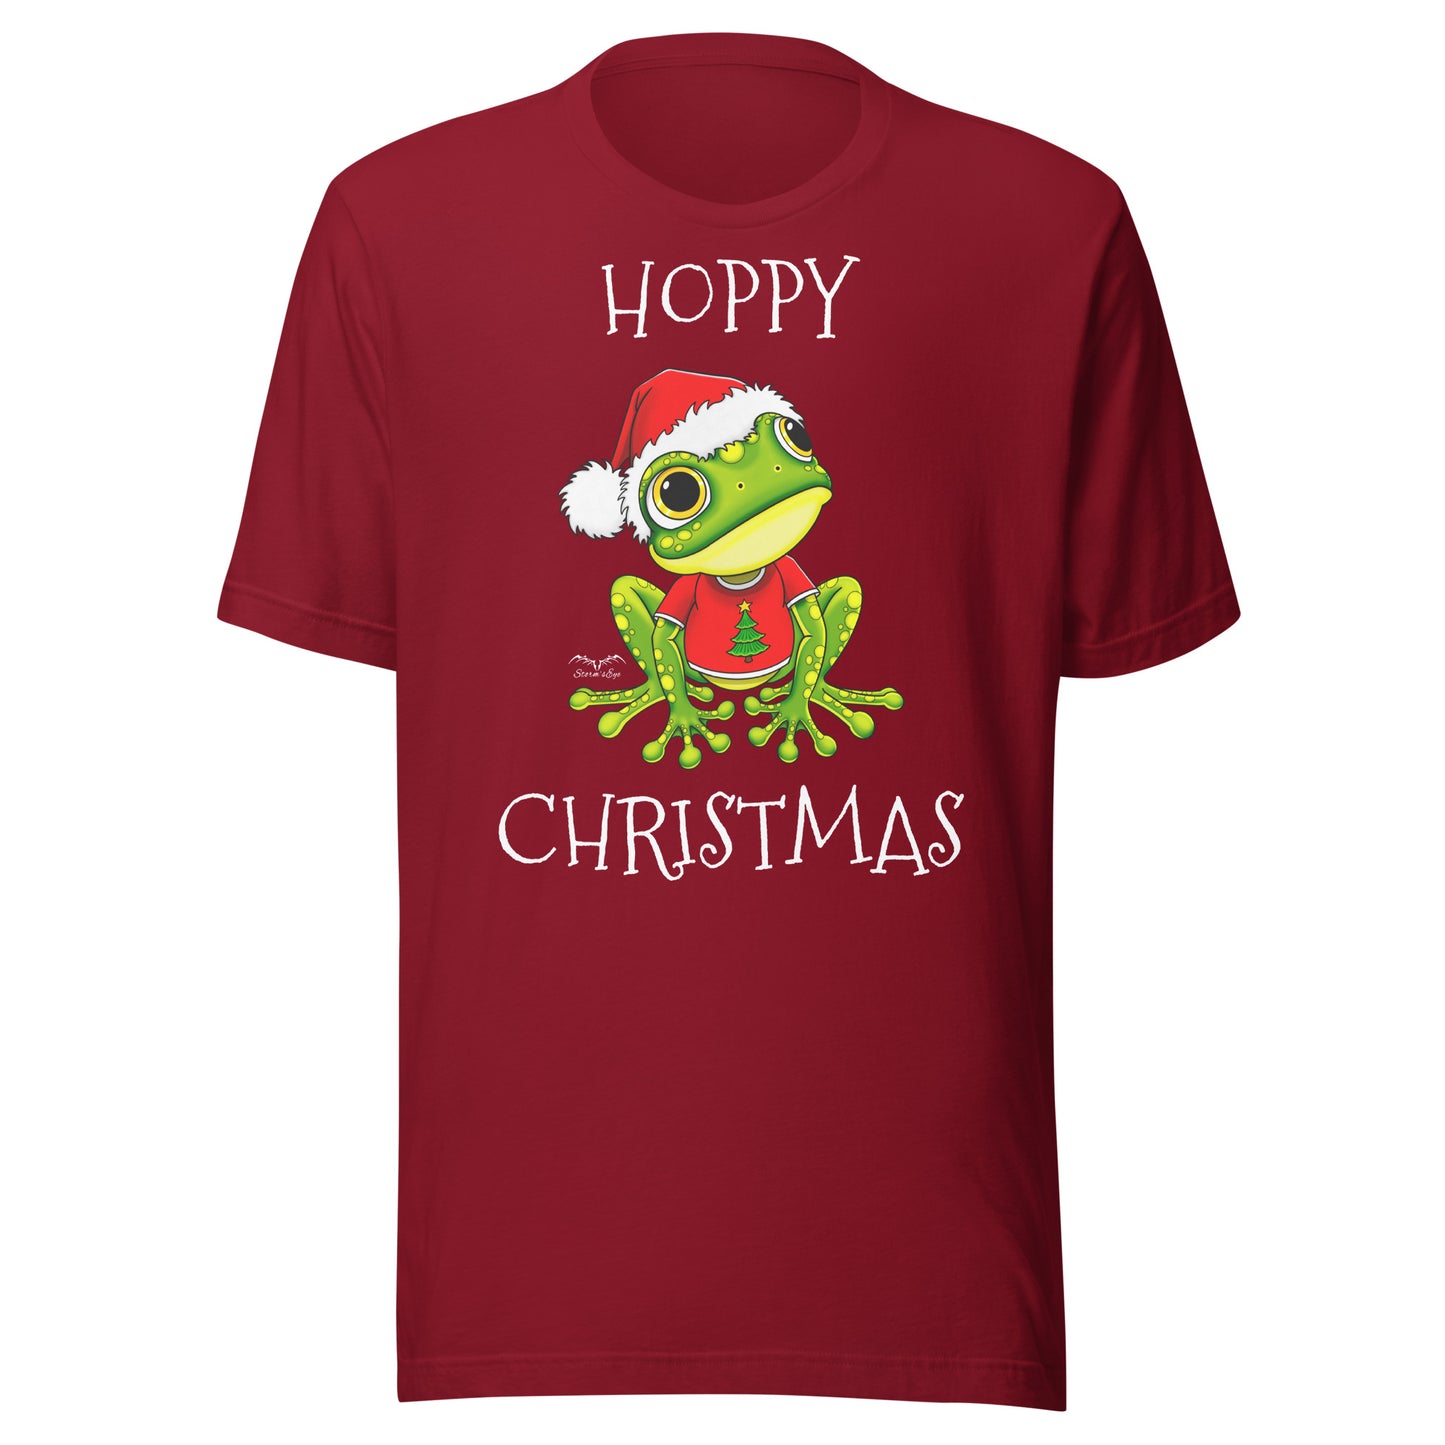 stormseye design hoppy christmas santa frog T shirt, flat view cardinal red